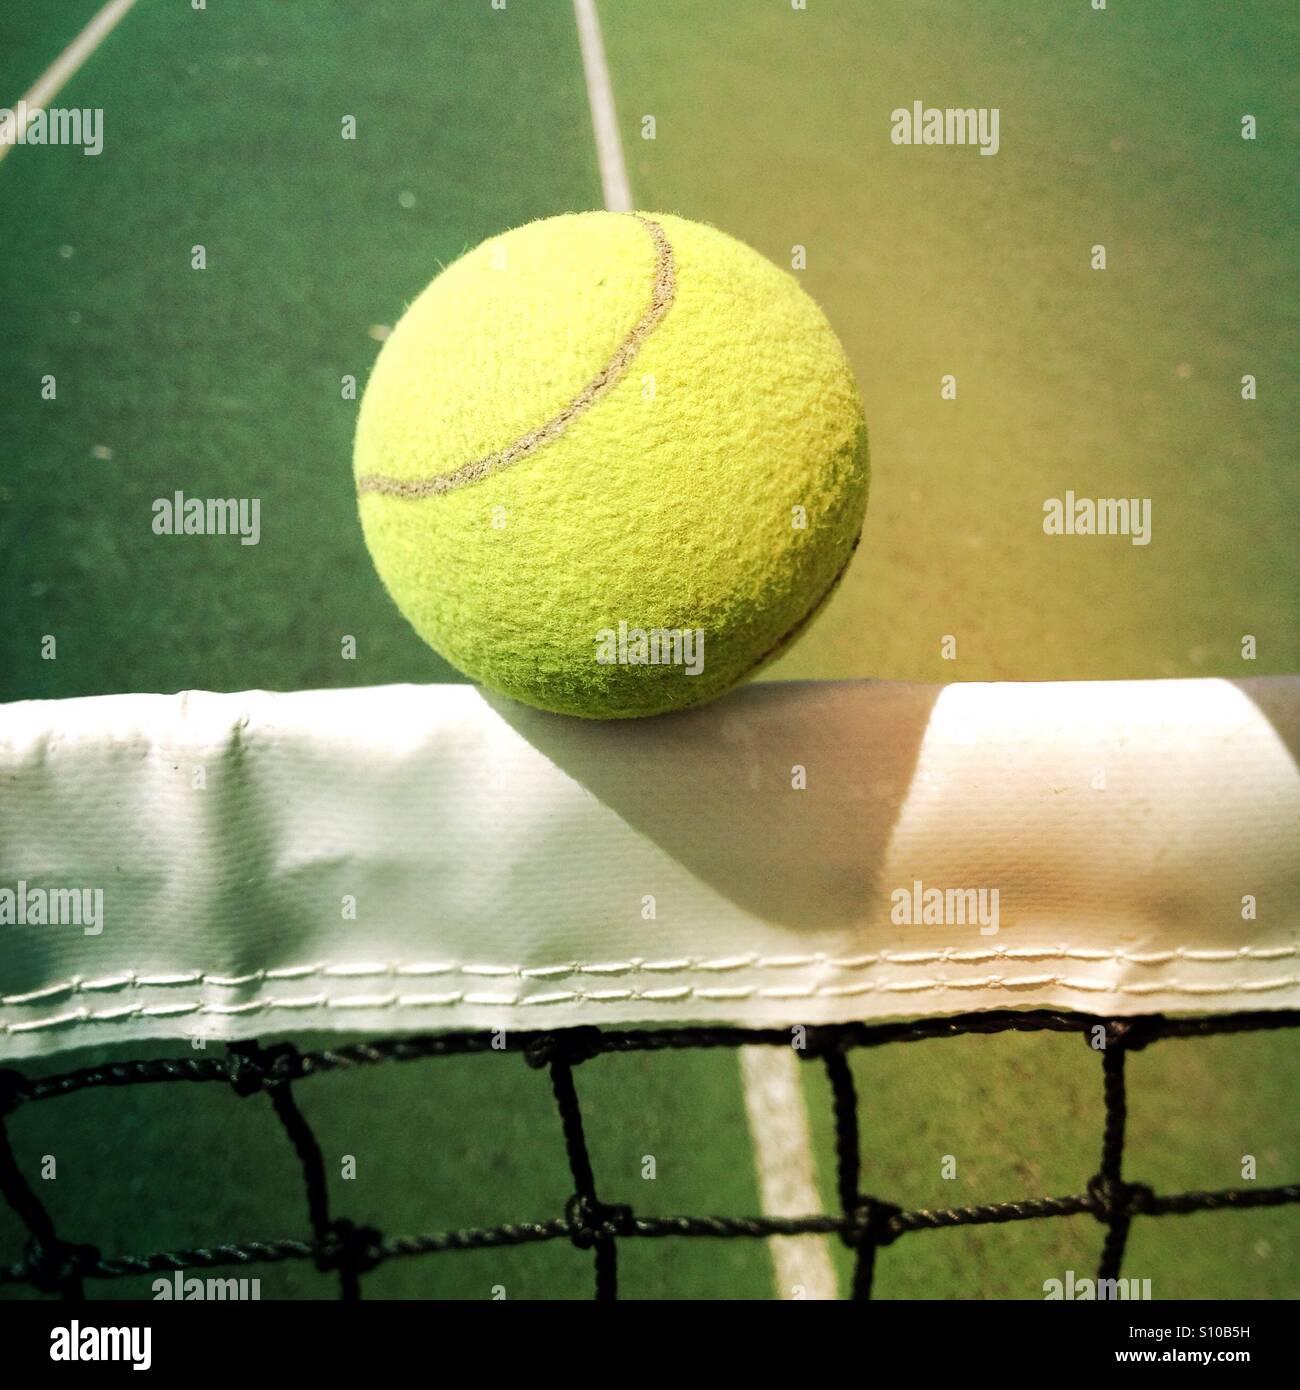 Tennis ball hitting the centre net of a tennis court Stock Photo